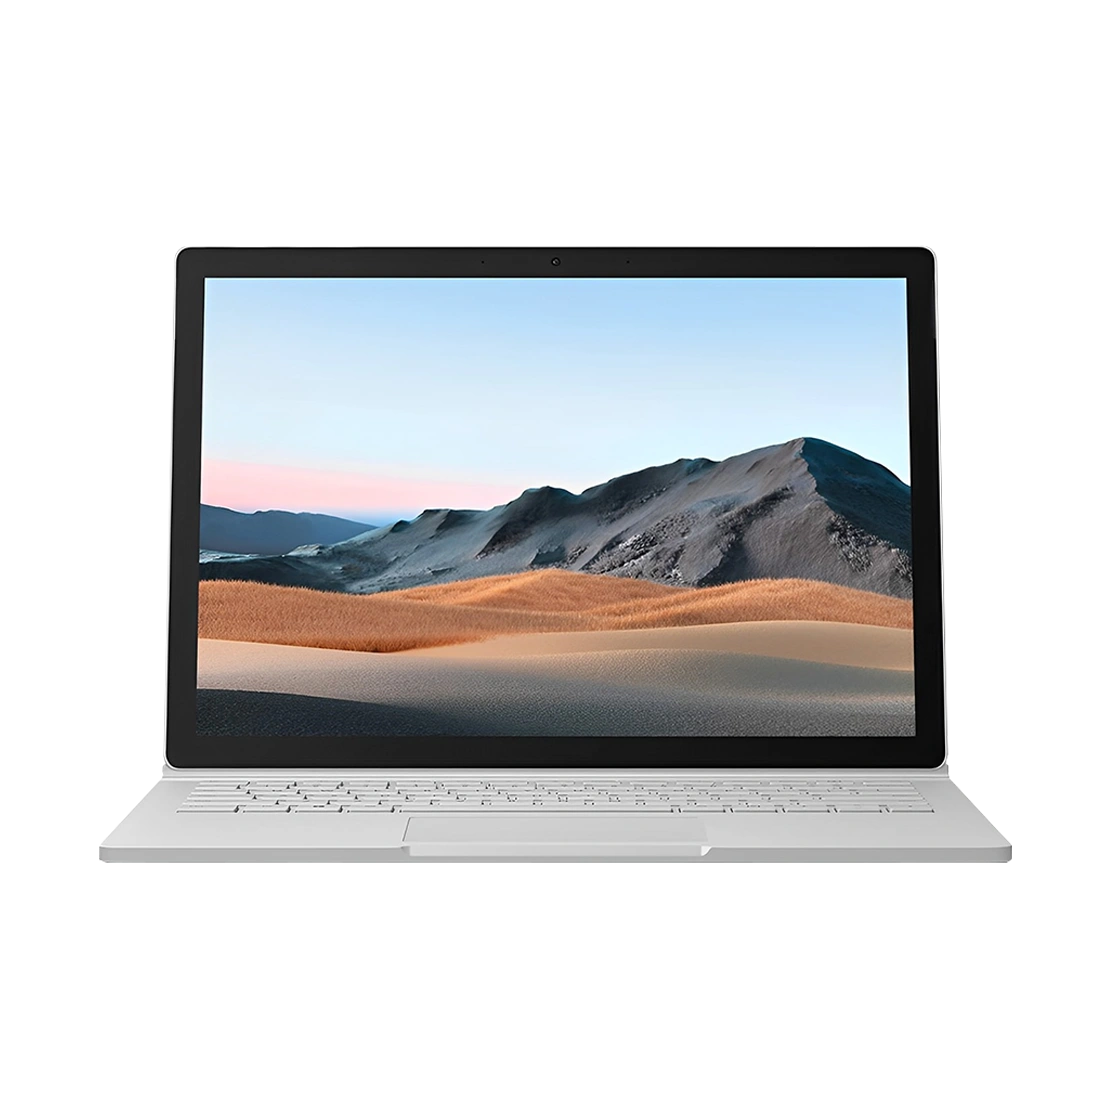 Microsoft Surface Book 3 13.5 inch Corei7 32GB 512GB GTX 1650 4GB